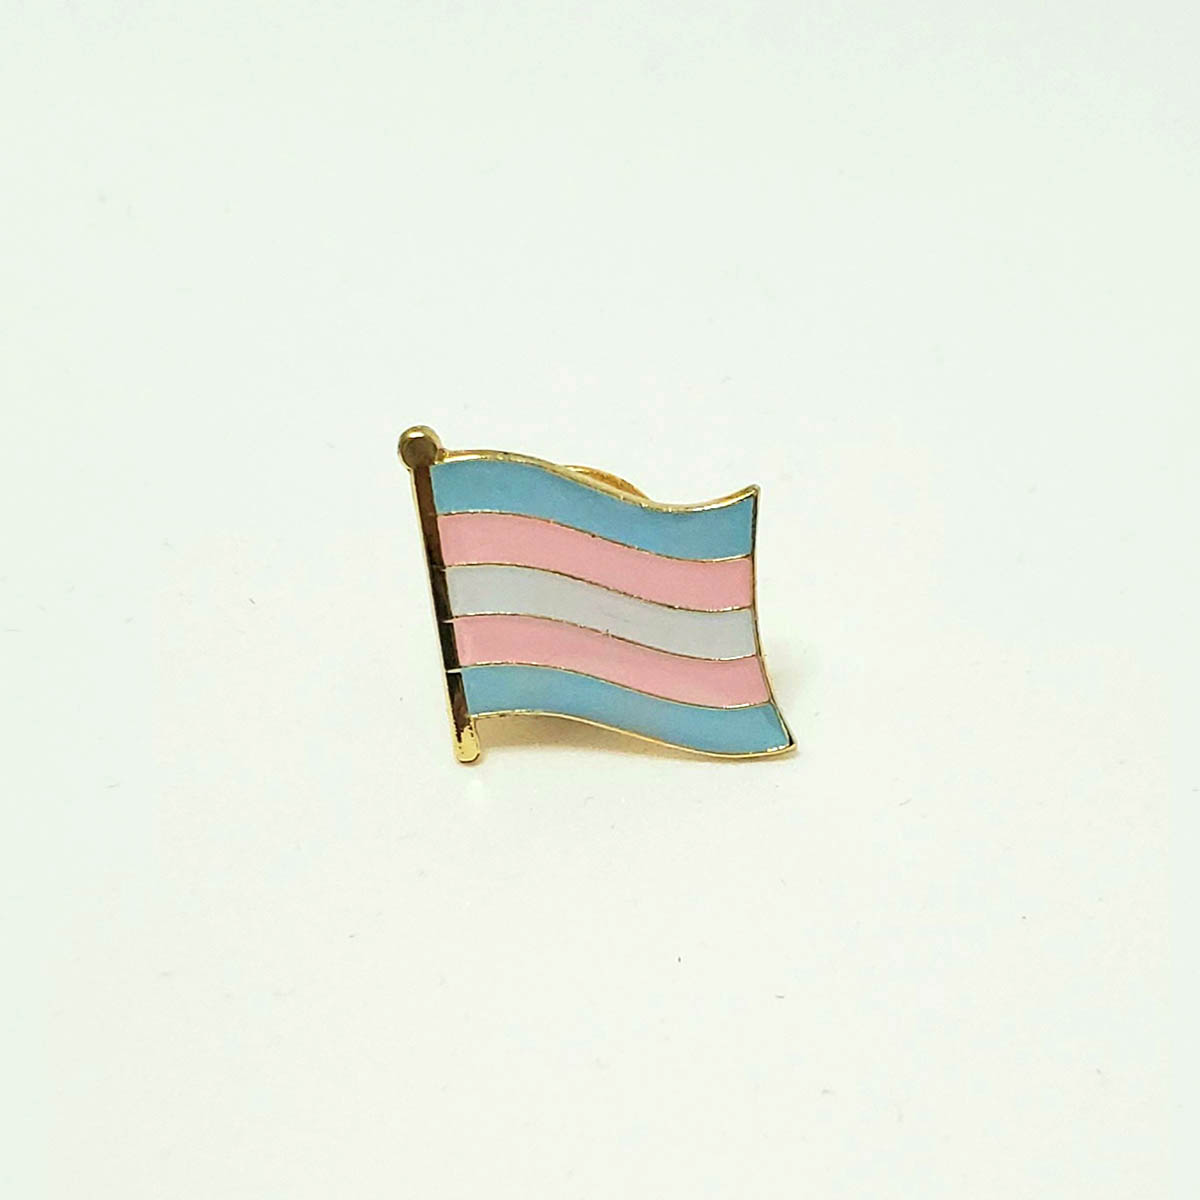 Trans Flag Lapel Pin - Gender Unbound